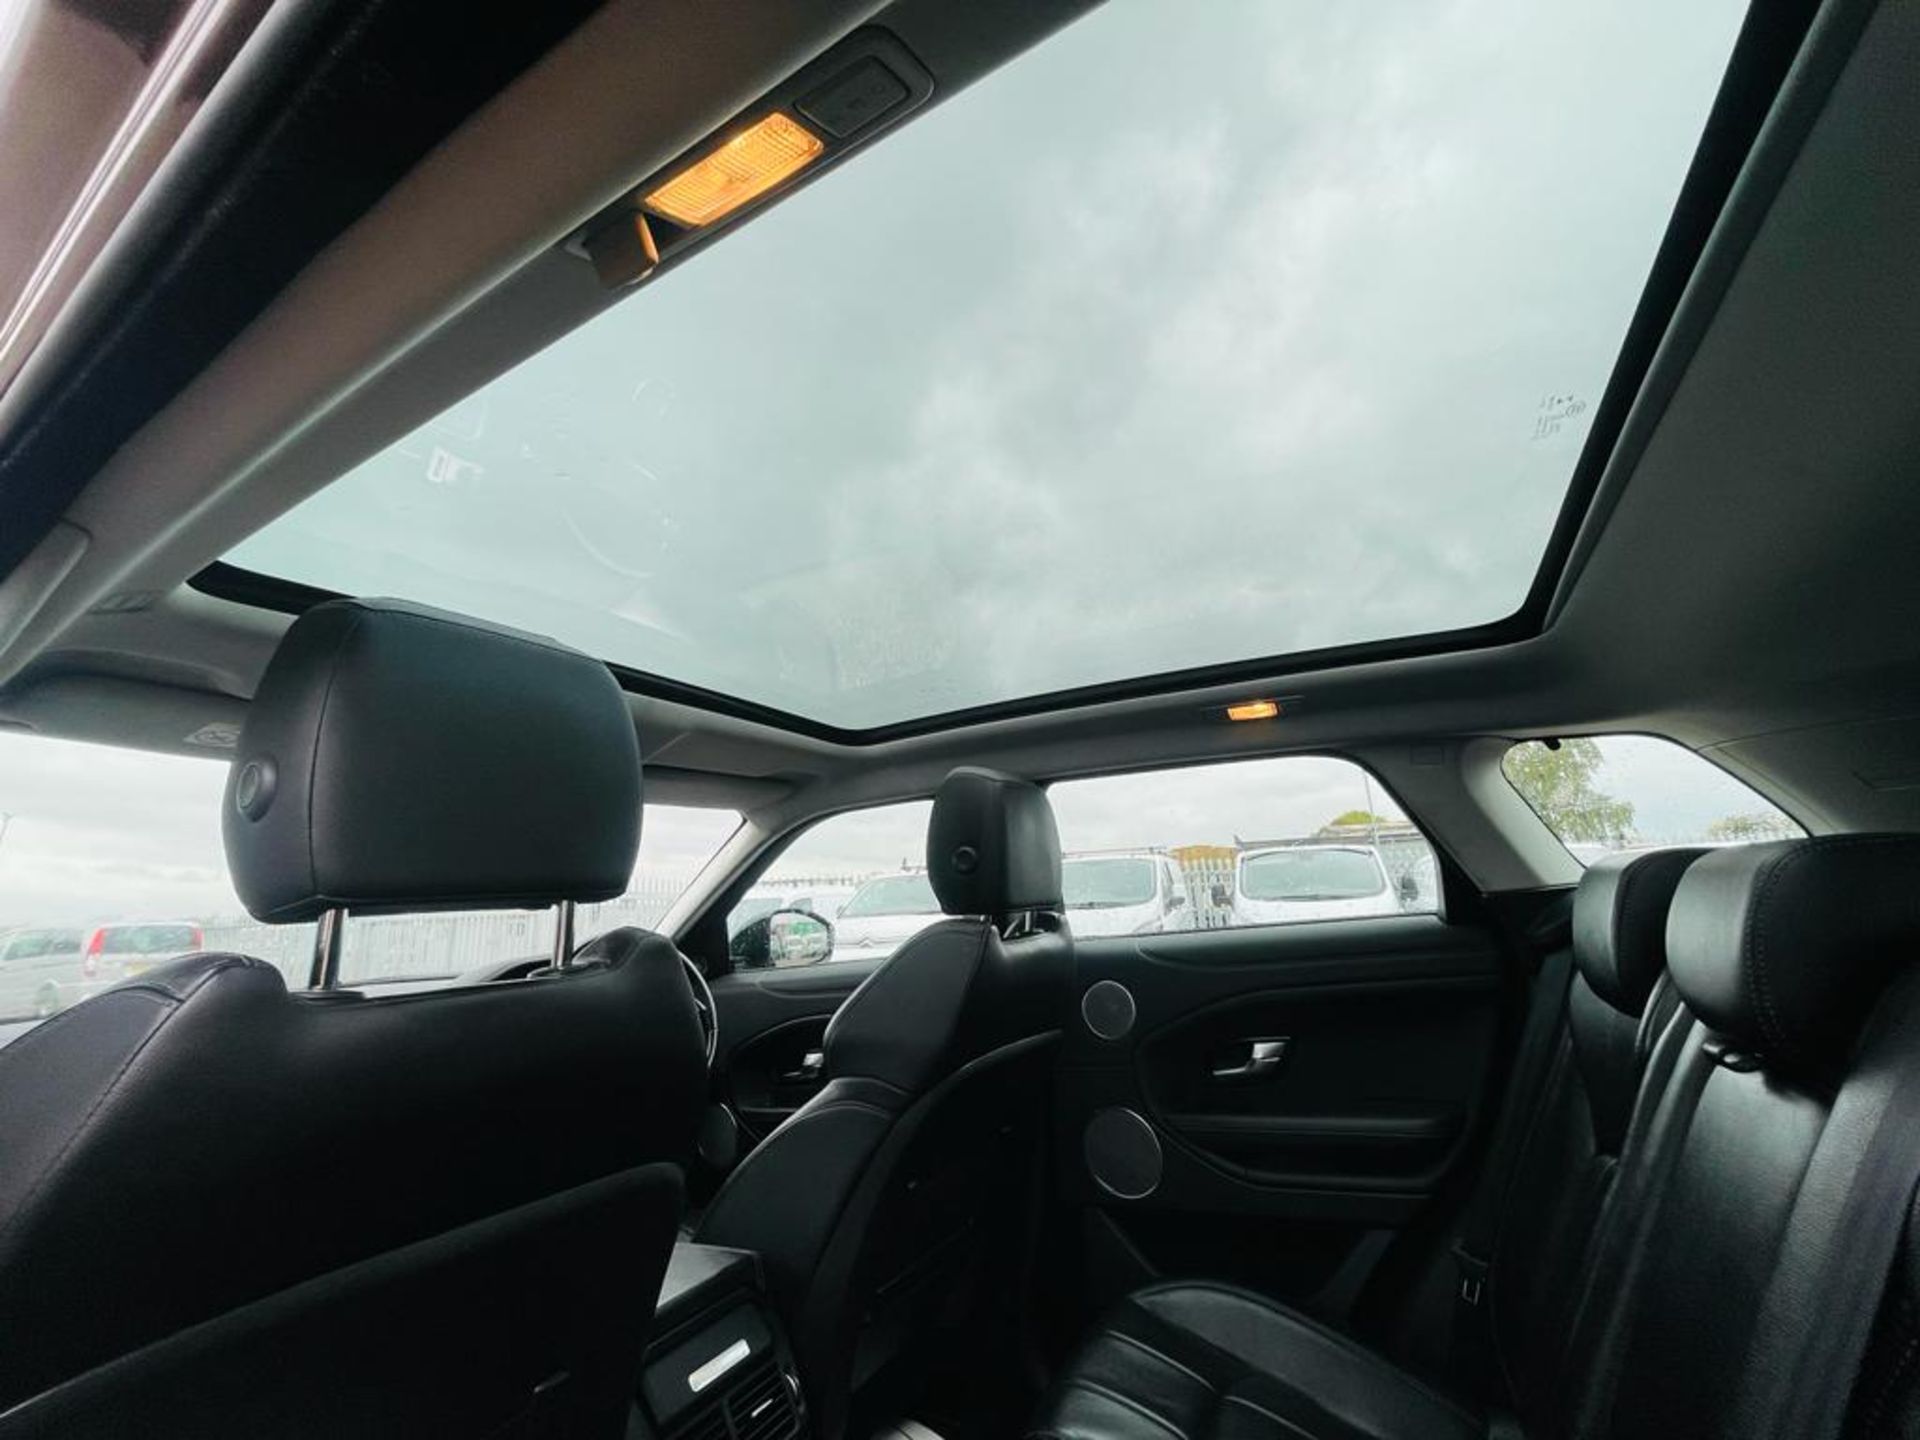 Range Rover Evoque 2.0 ED4 150 SE Tech 2018 '18 Reg' Sat Nav - Panoramic Roof - A/C - ULEZ Compliant - Image 9 of 24